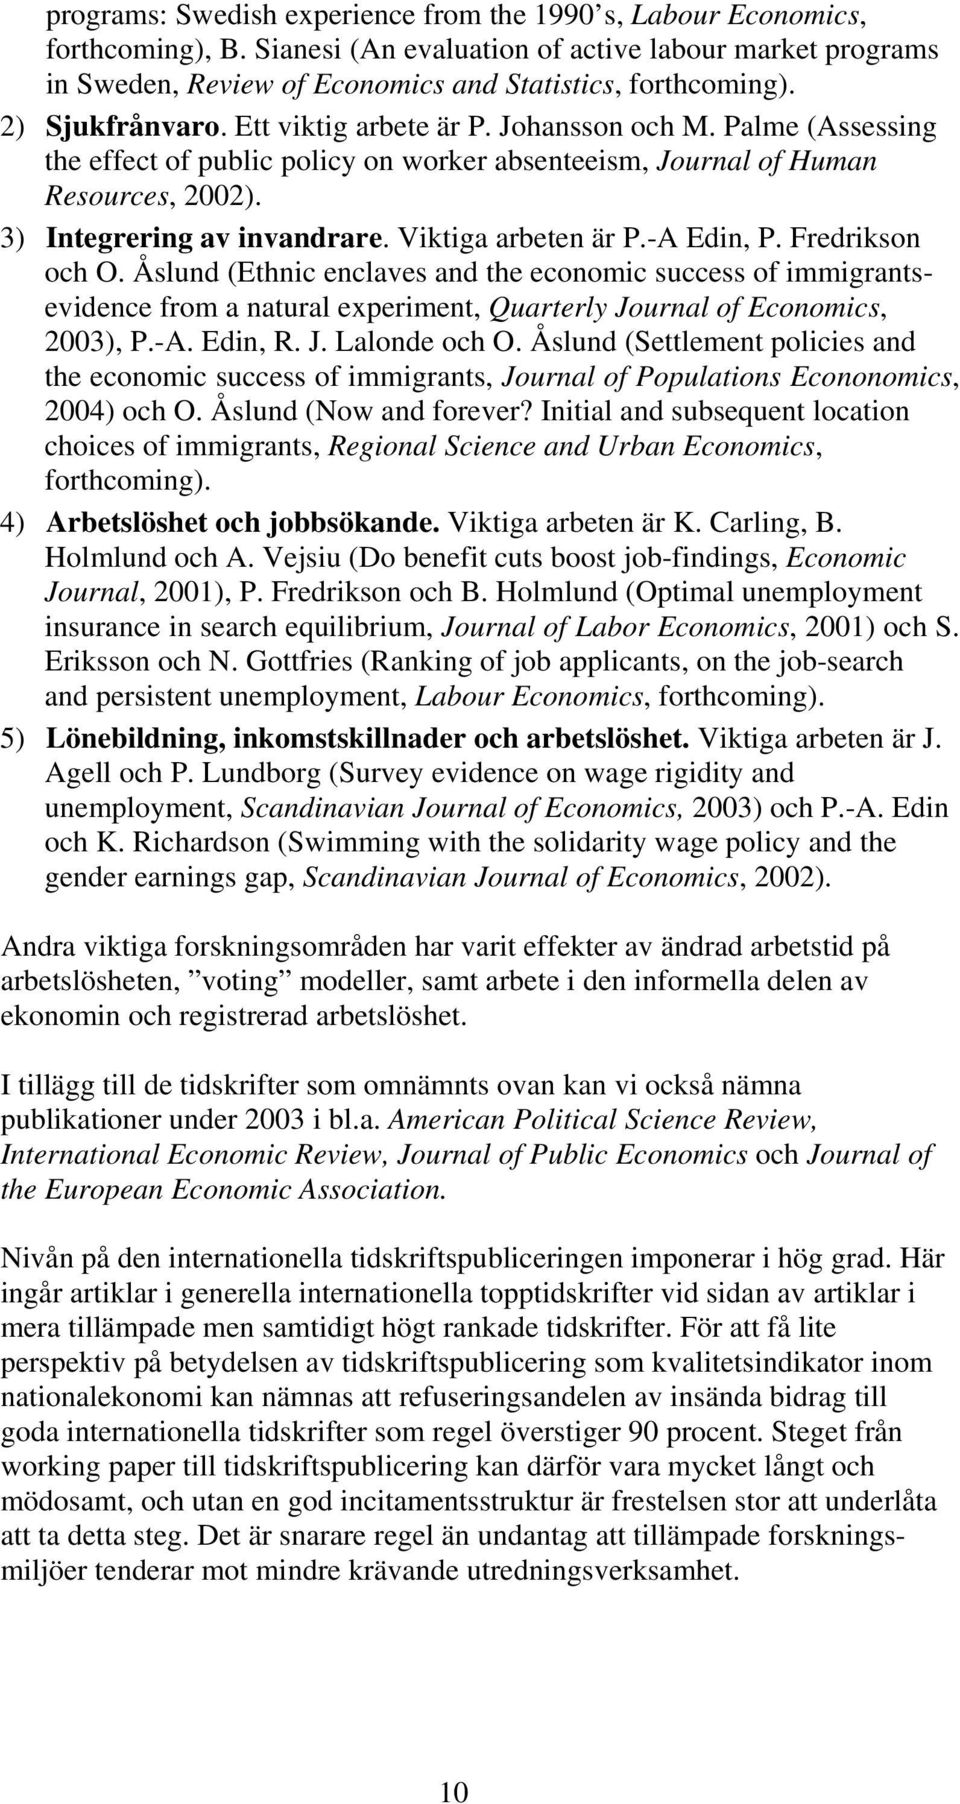 Viktiga arbeten är P.-A Edin, P. Fredrikson och O. Åslund (Ethnic enclaves and the economic success of immigrantsevidence from a natural experiment, Quarterly Journal of Economics, 2003), P.-A. Edin, R.